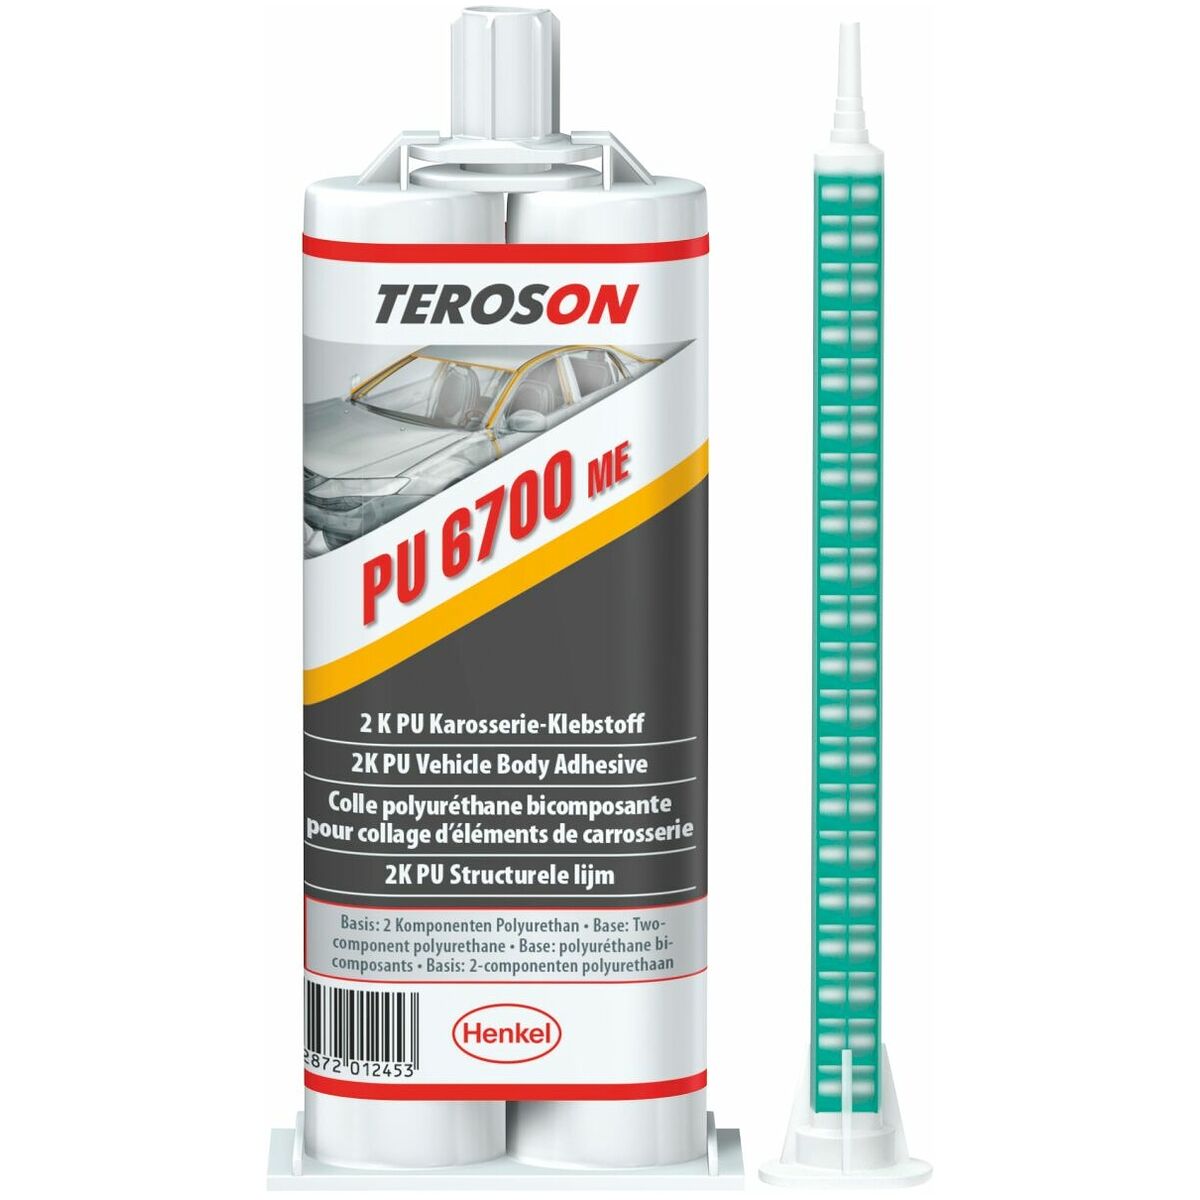 Teromix 2K-PU-Klebstoff  6700ME